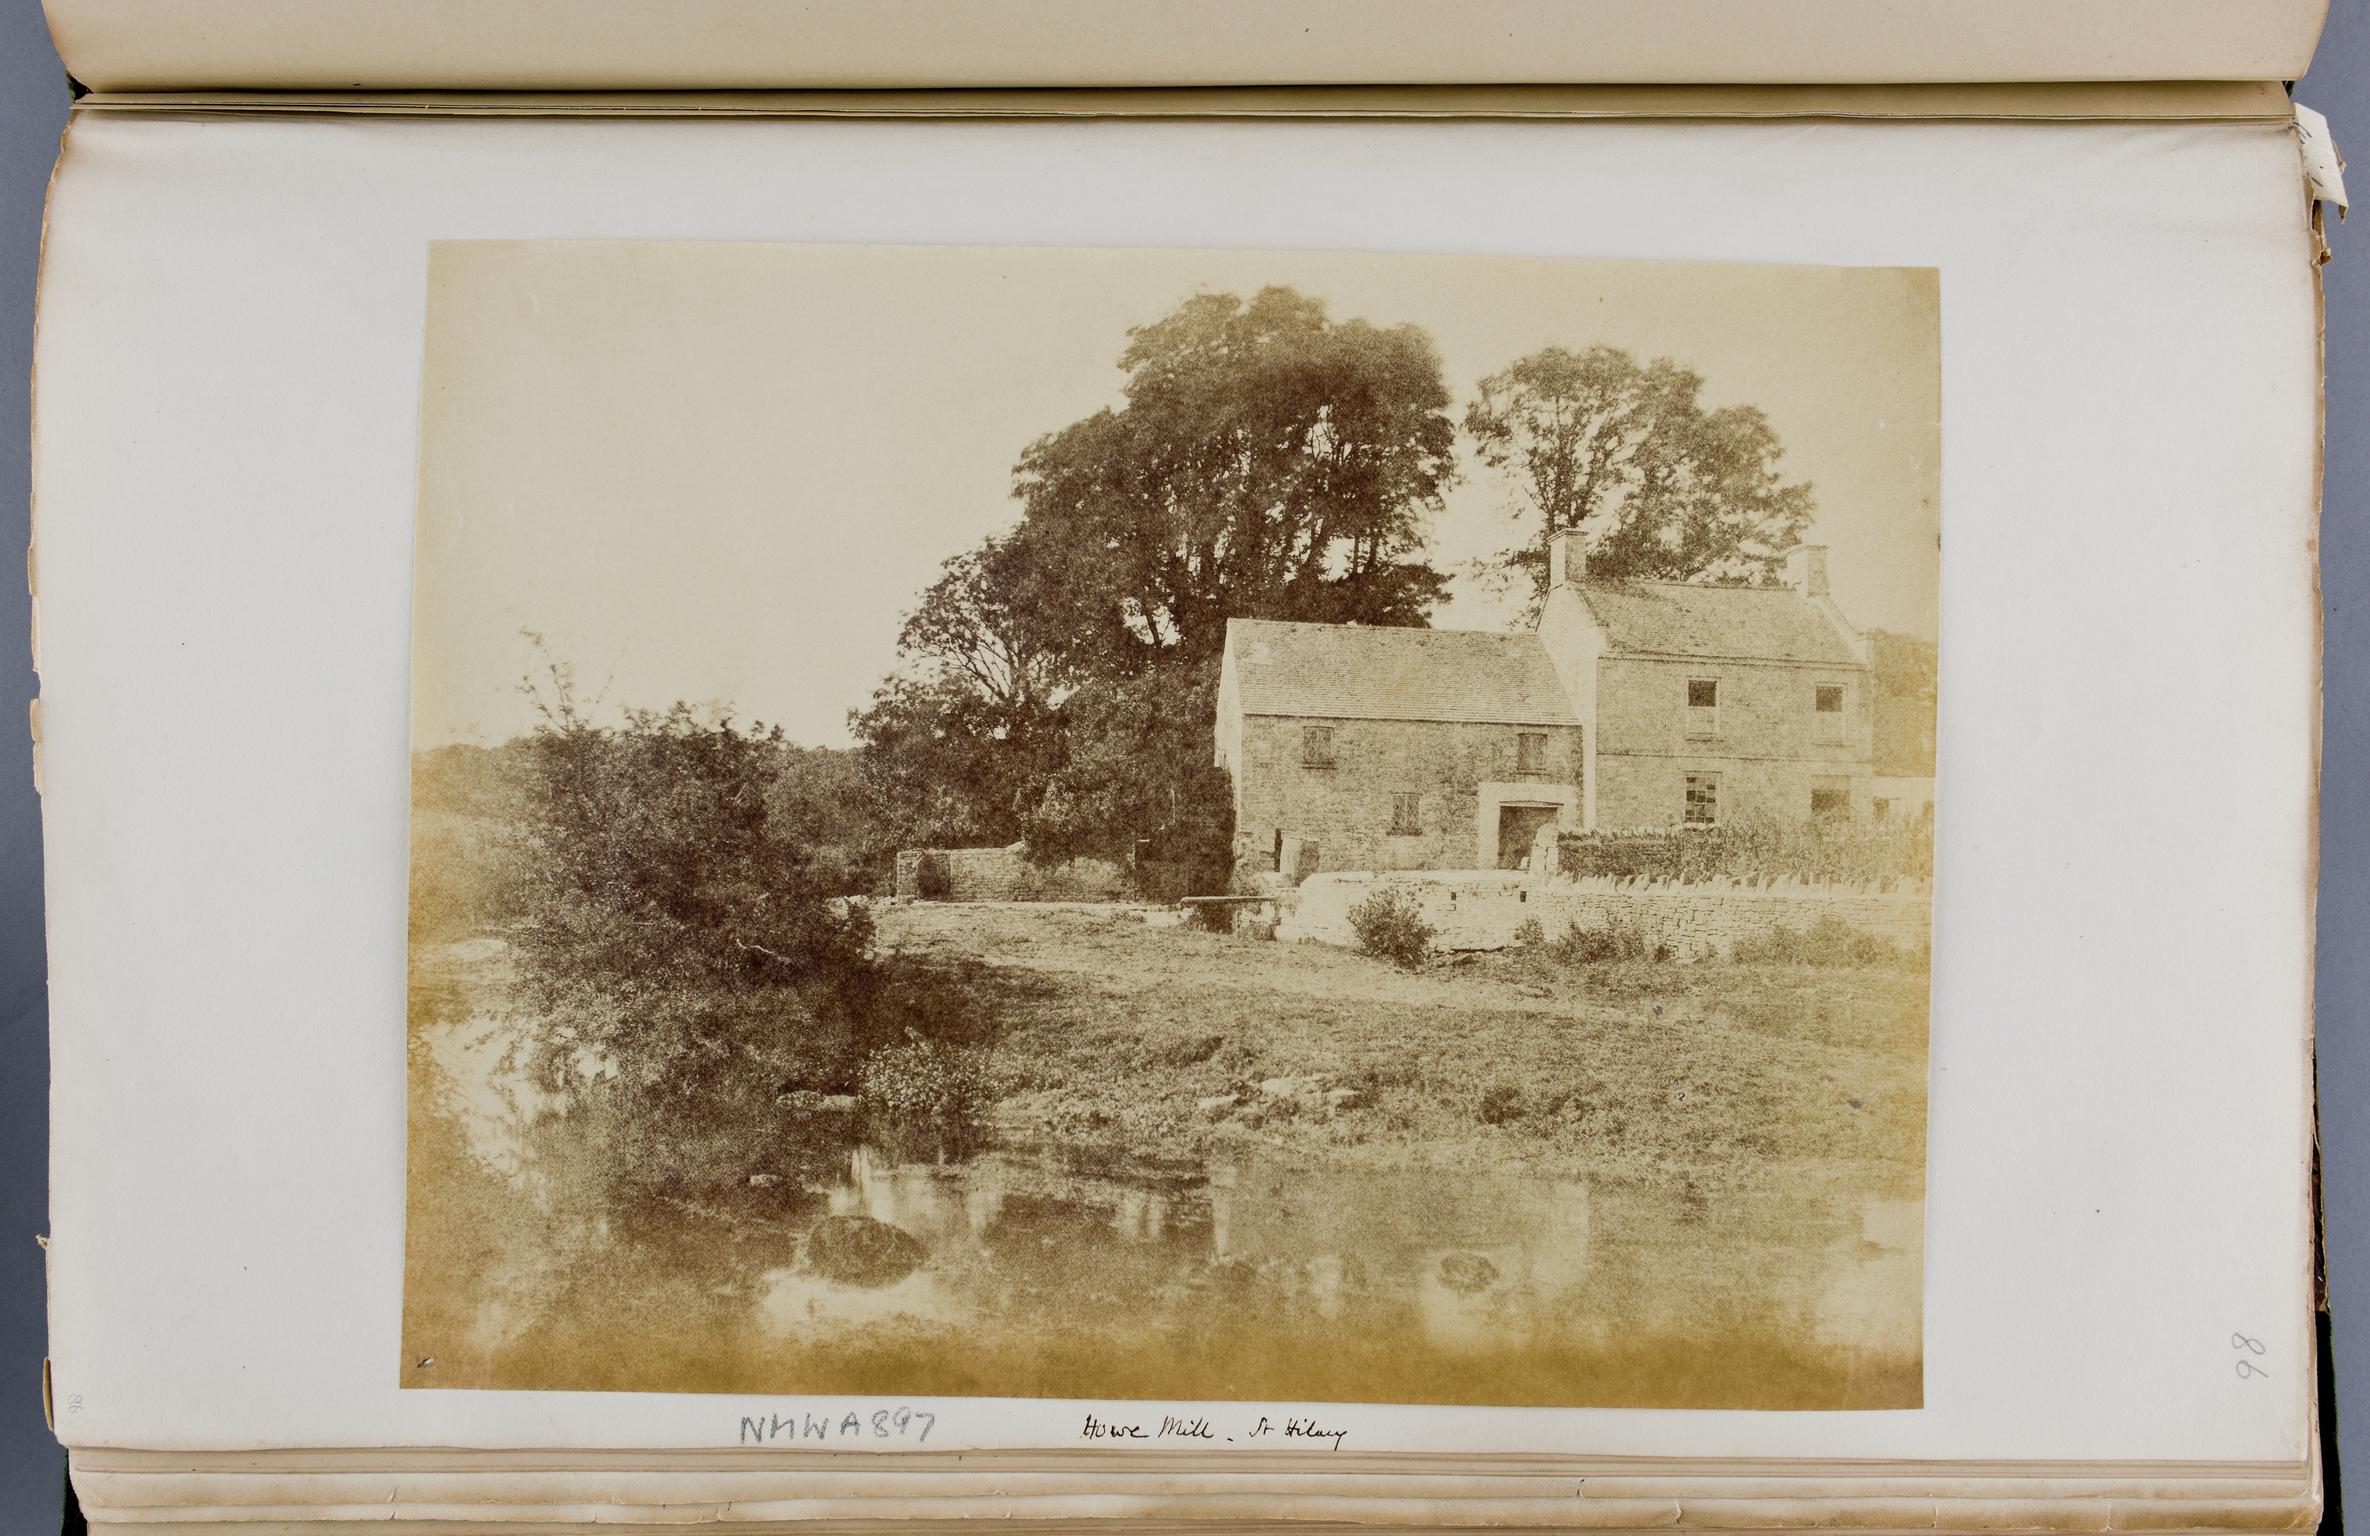 Howe Mill, St Hilary